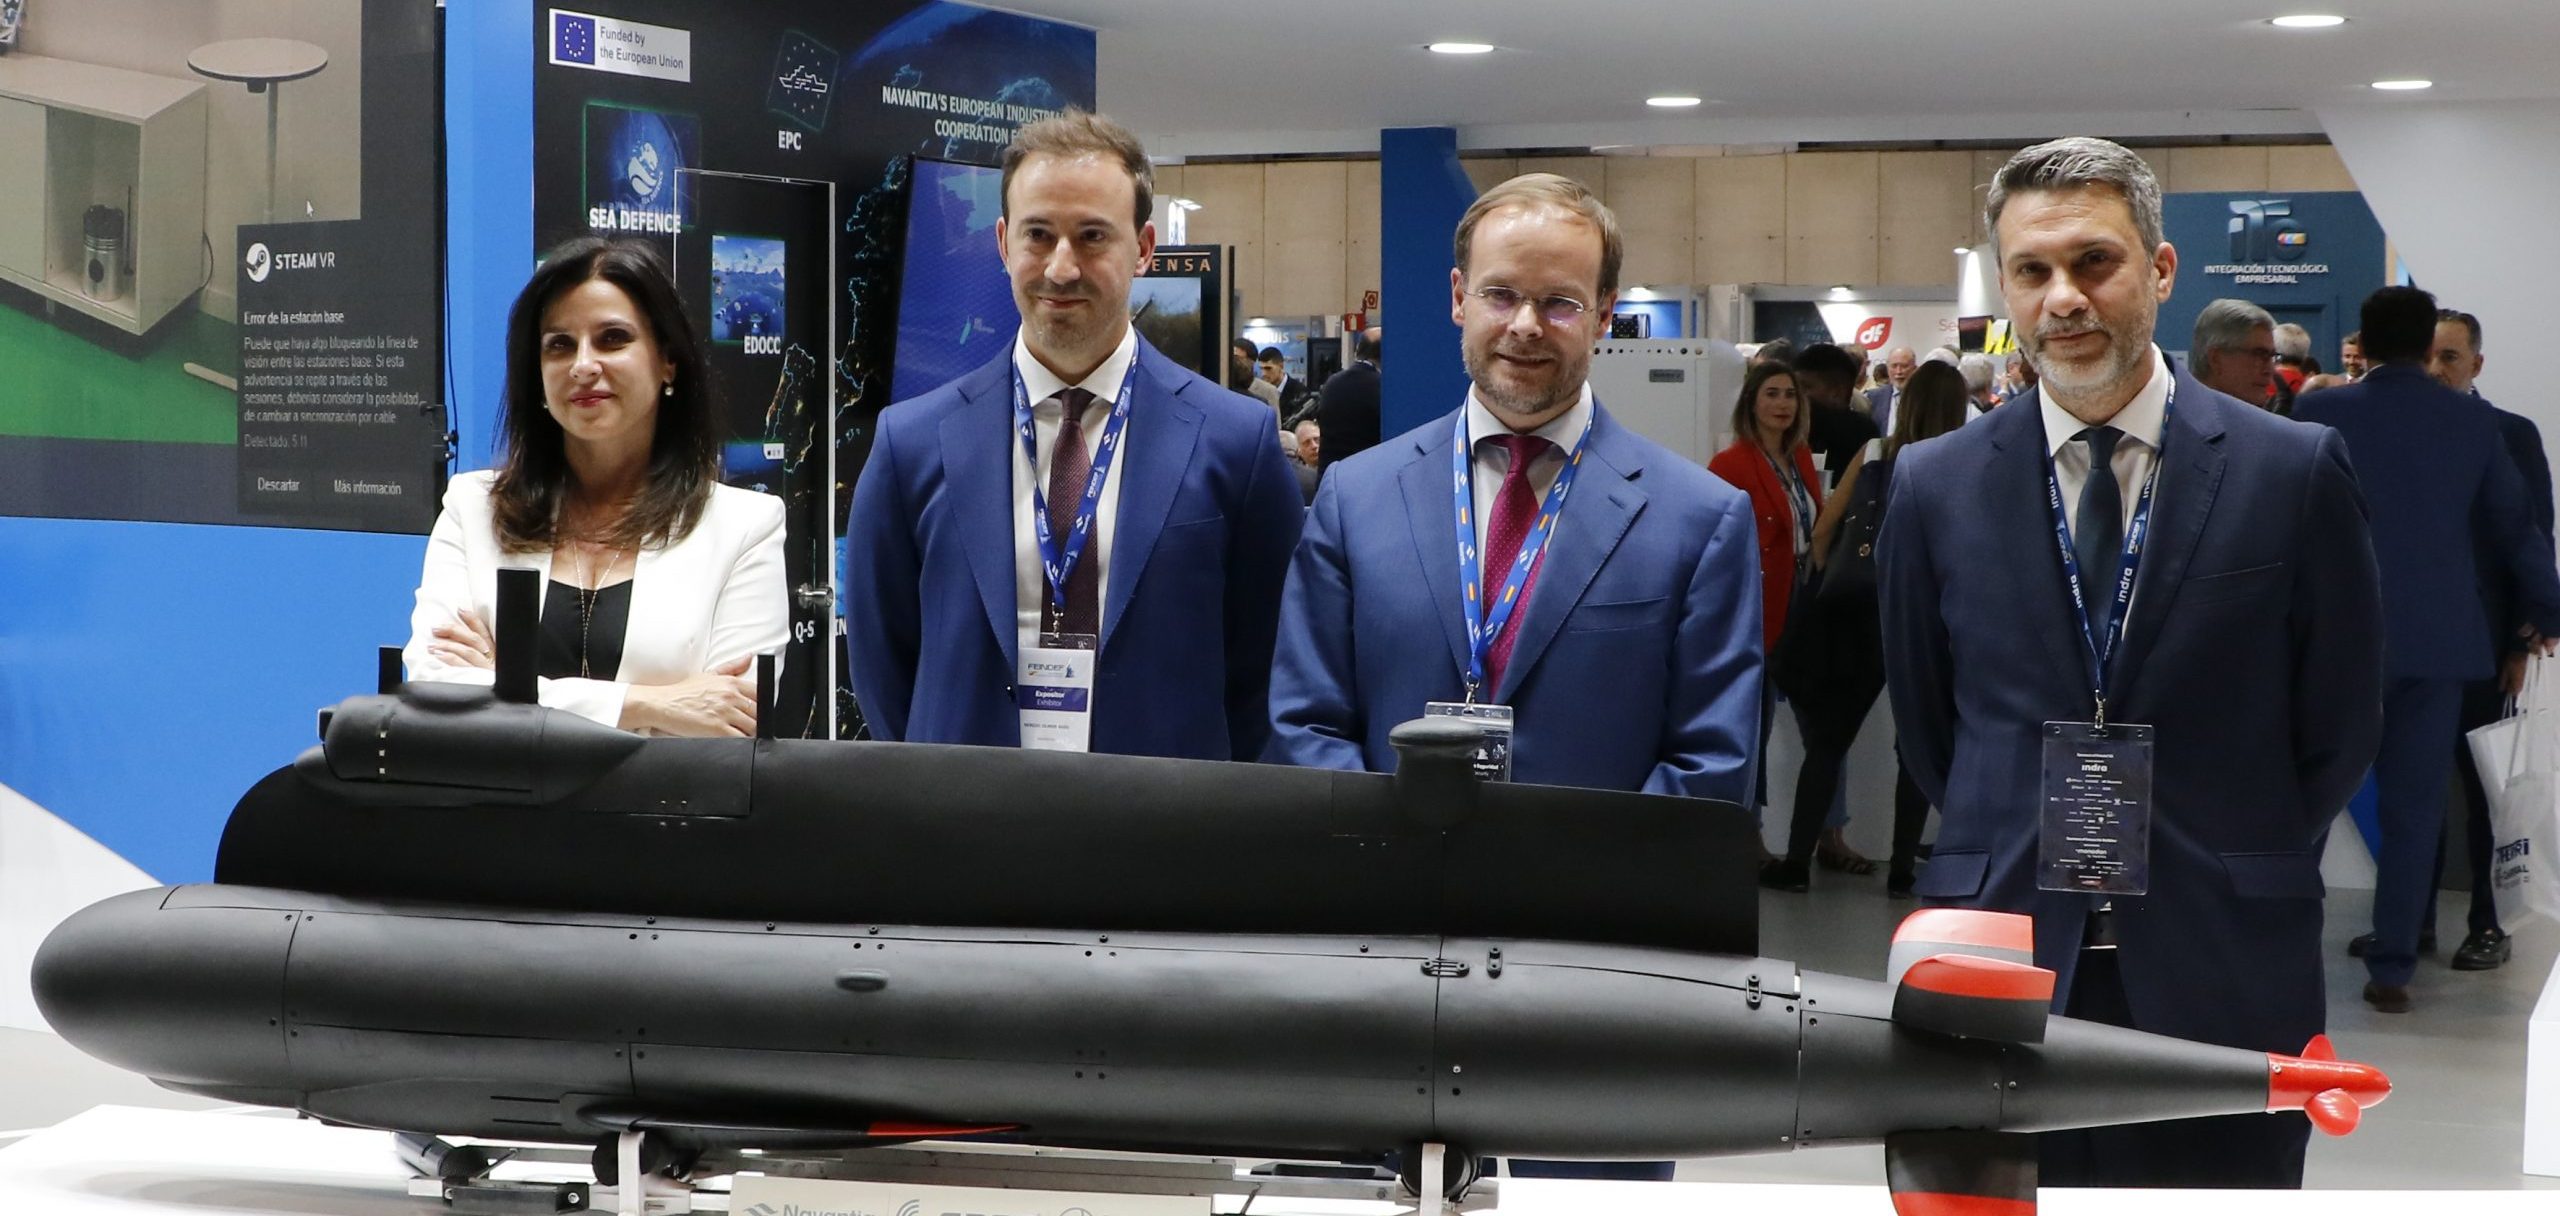 Proyecto Wise, el primer dron kamikaze submarino diseñado en España